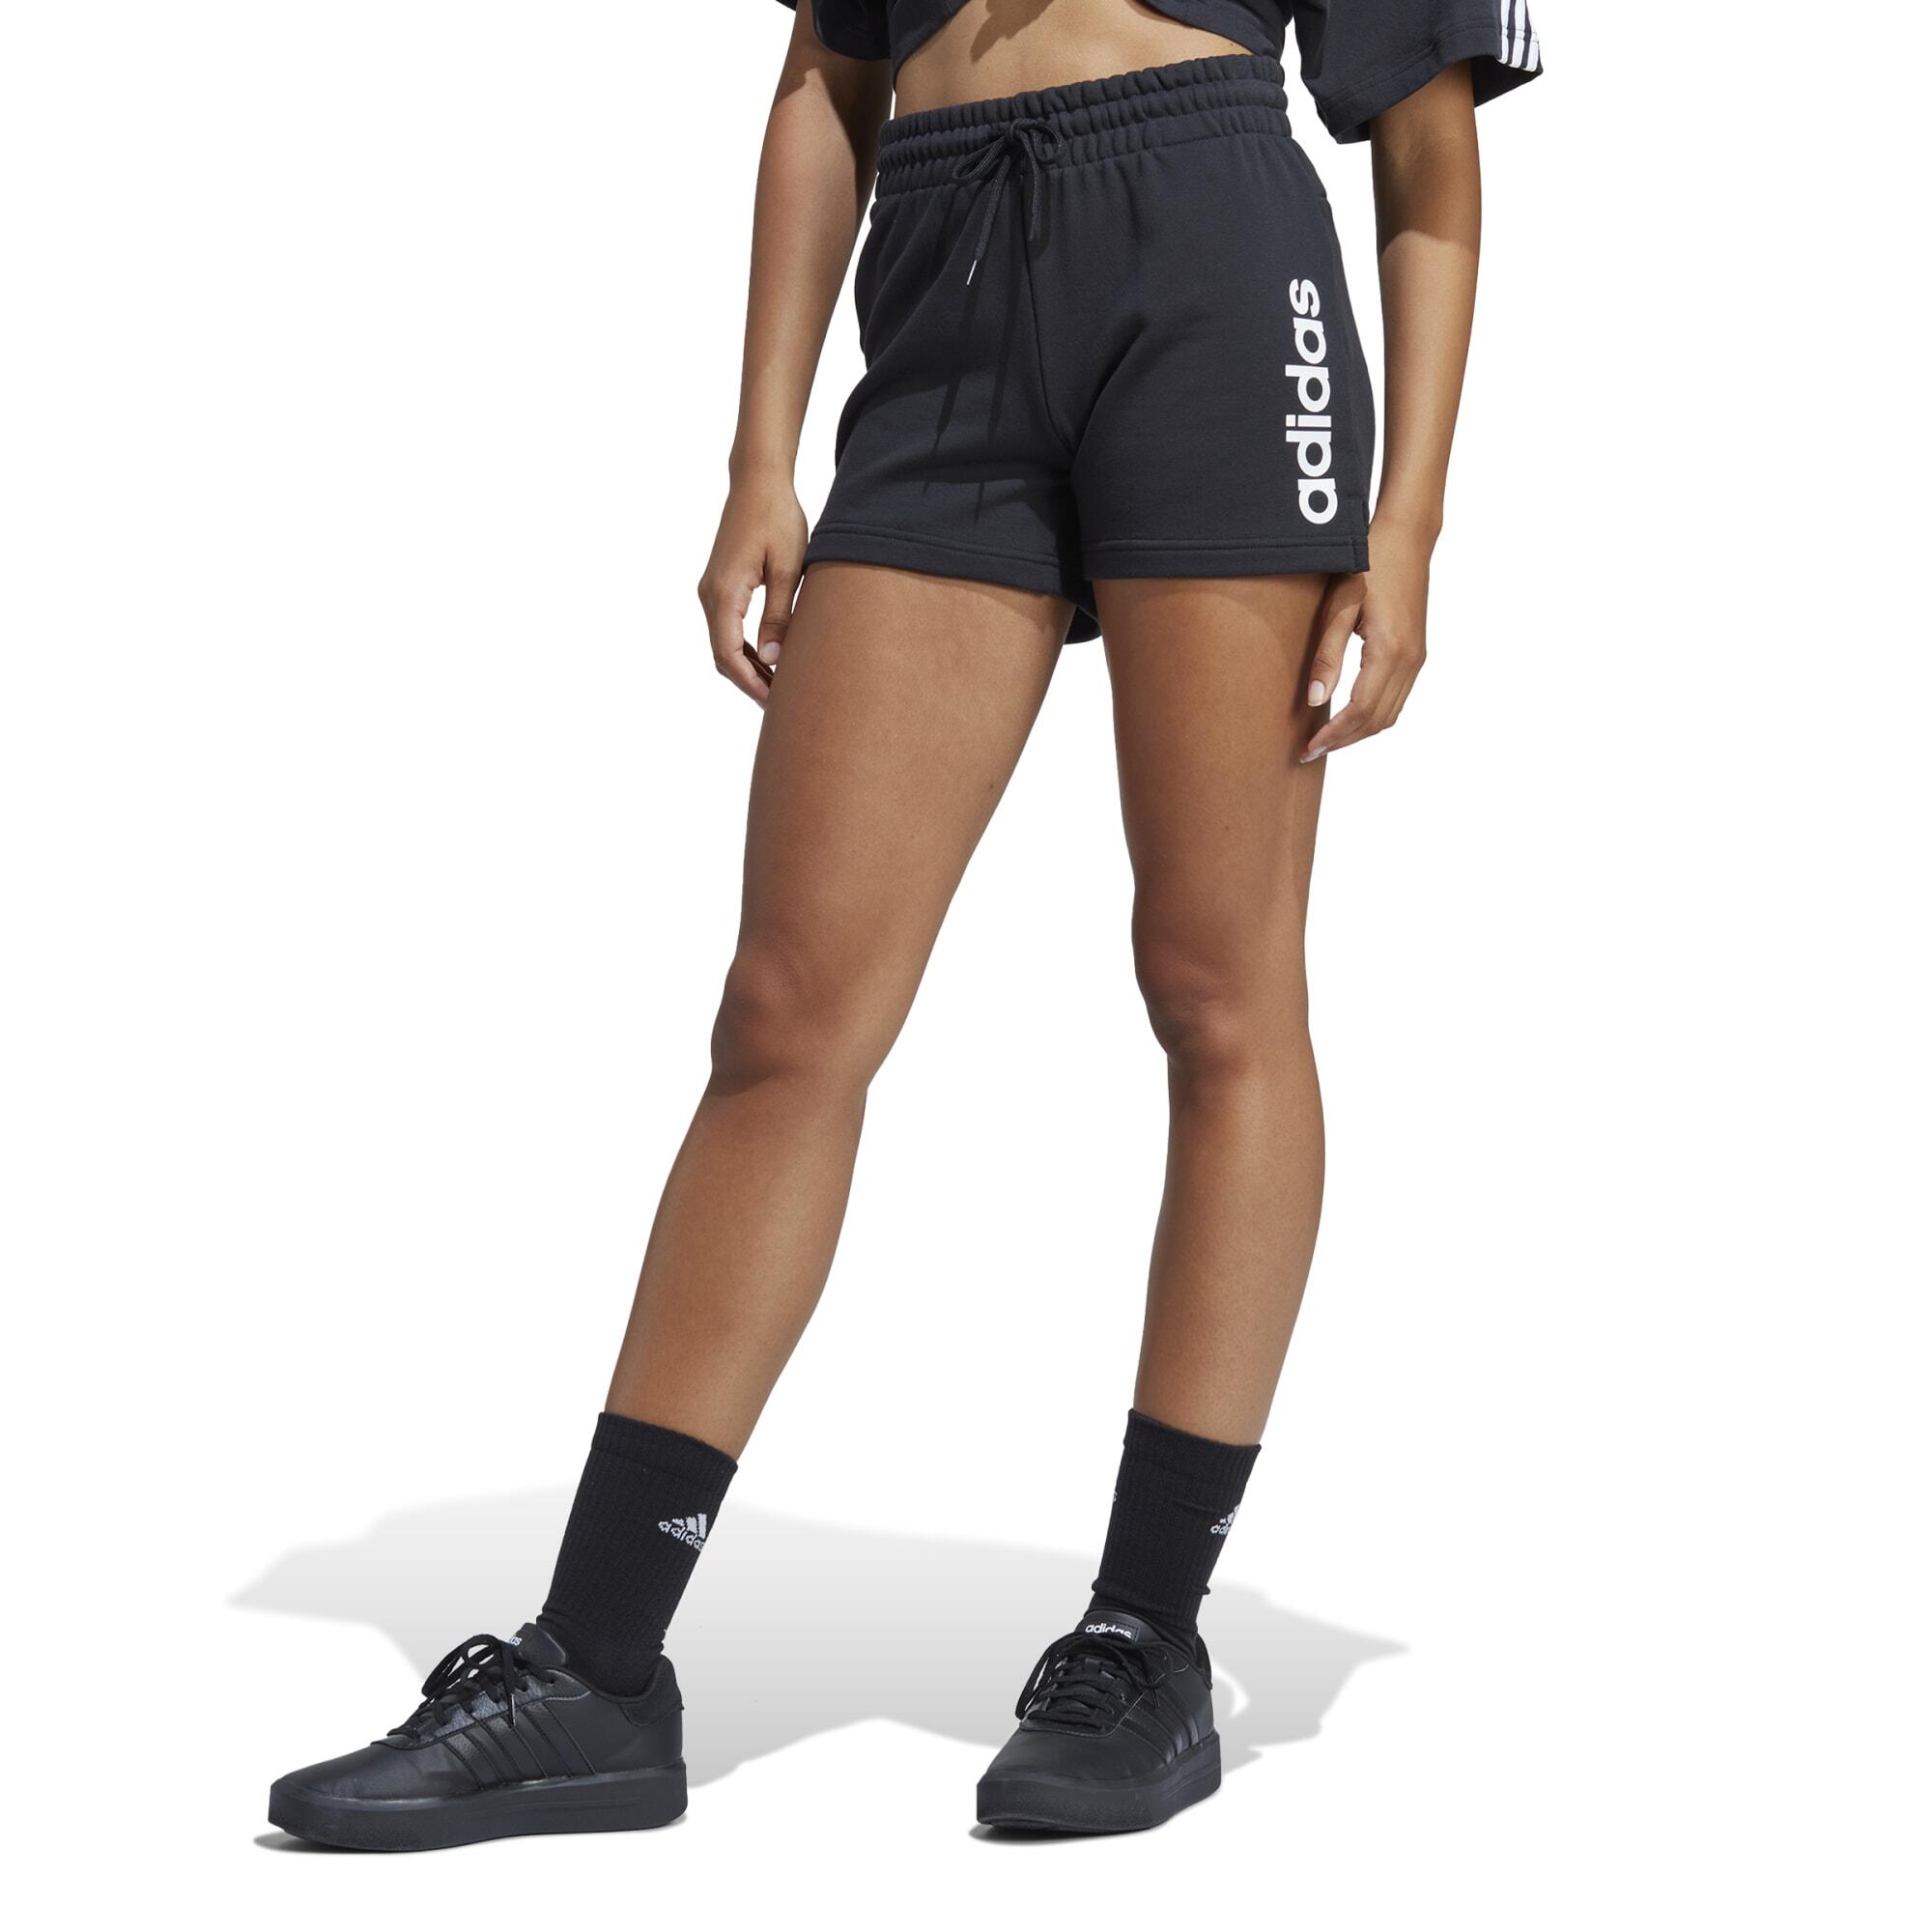 Decathlon | Pantaloncini donna fitness Adidas regular 100% cotone neri |  Adidas